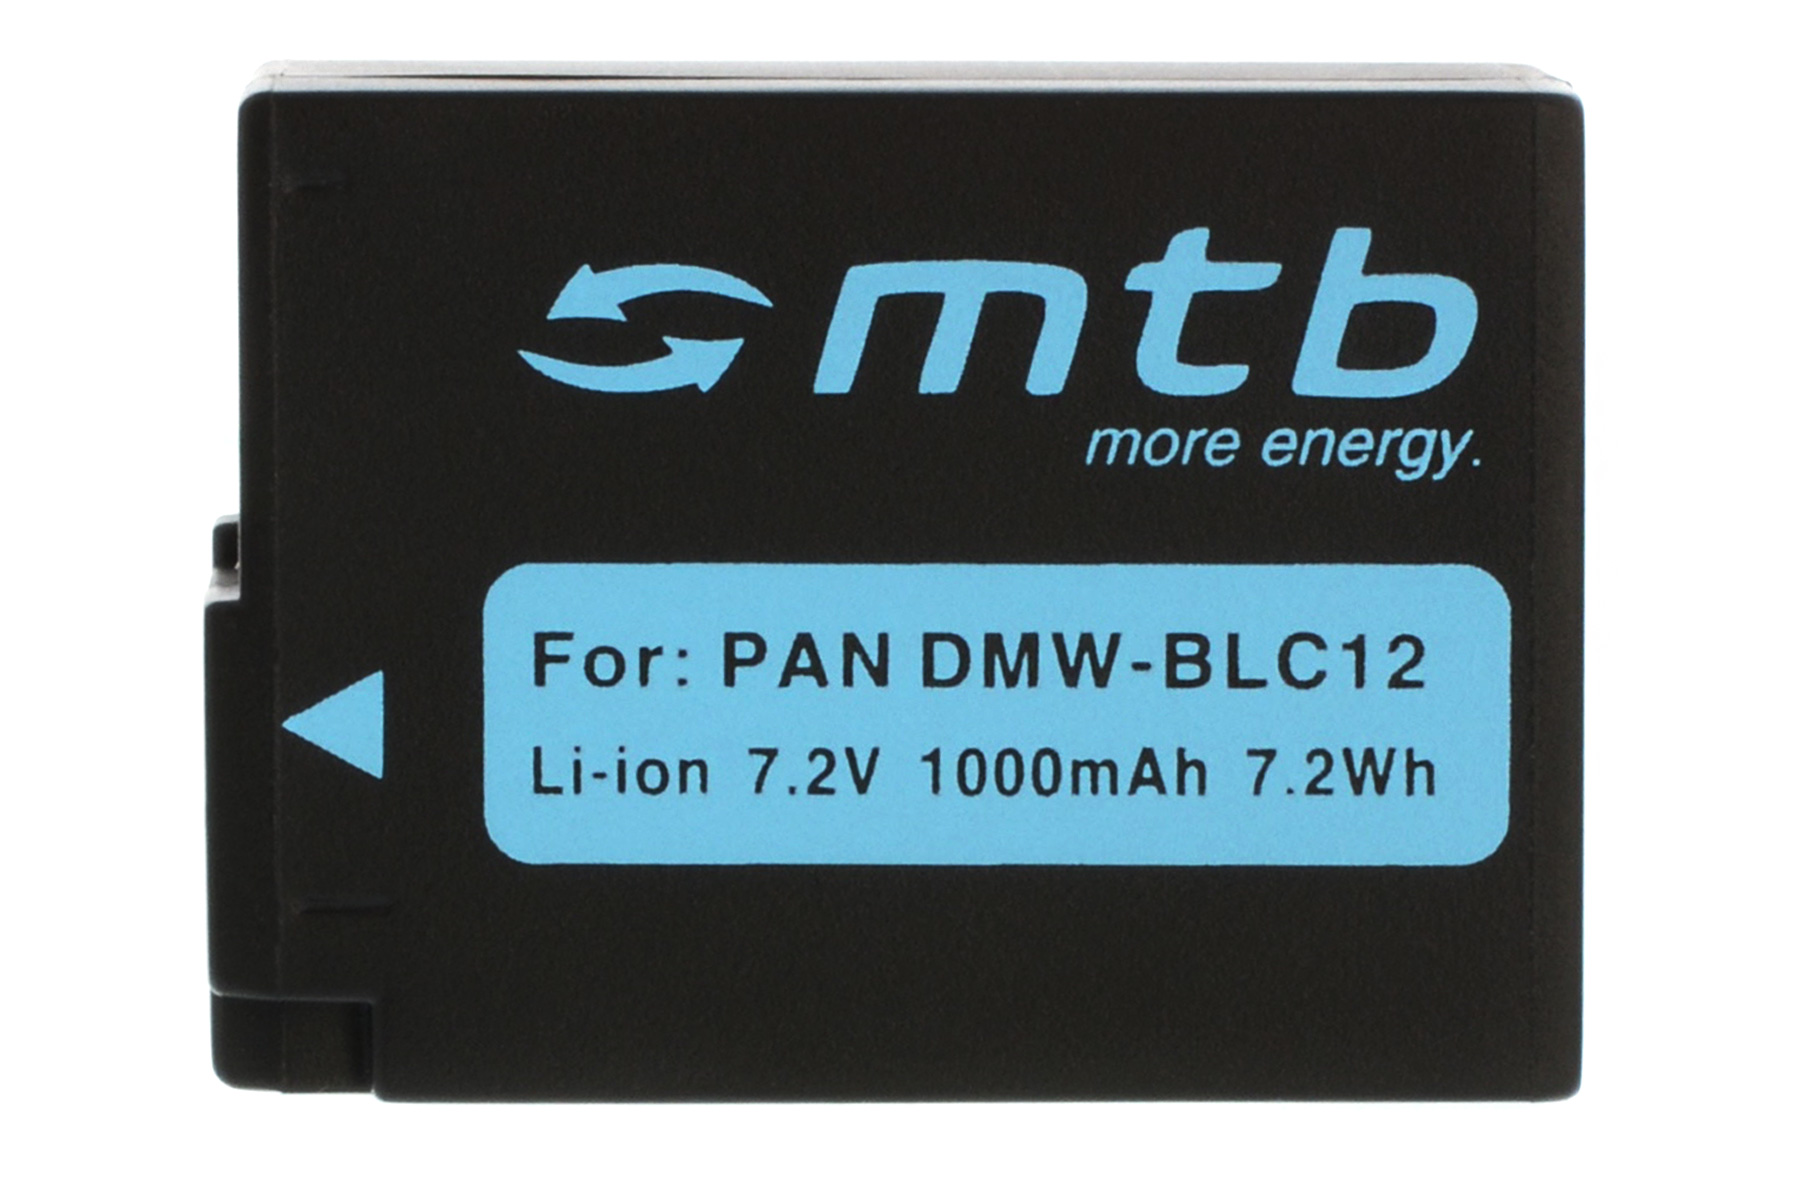 mAh BAT-262 MTB Akku, MORE 1000 2x DMW-BLC12 ENERGY Li-Ion,